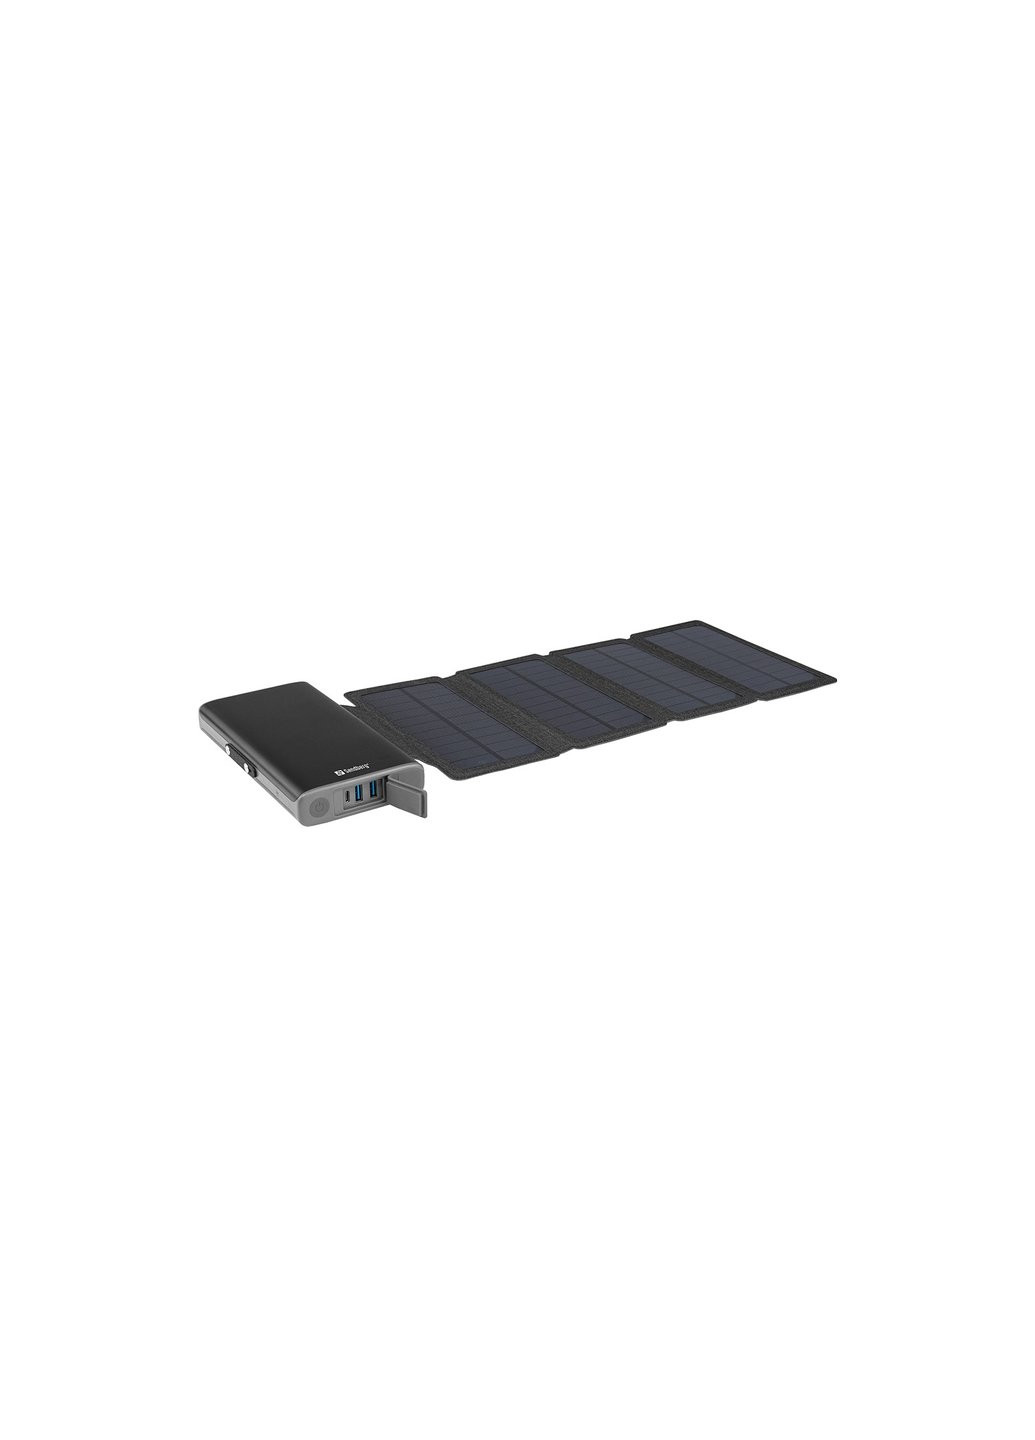 Батарея универсальная 25000mAh, Solar 4-Panel/8W, USB-C input/output(18W max), USB-A*2/3A(Max) (420-56) Sandberg